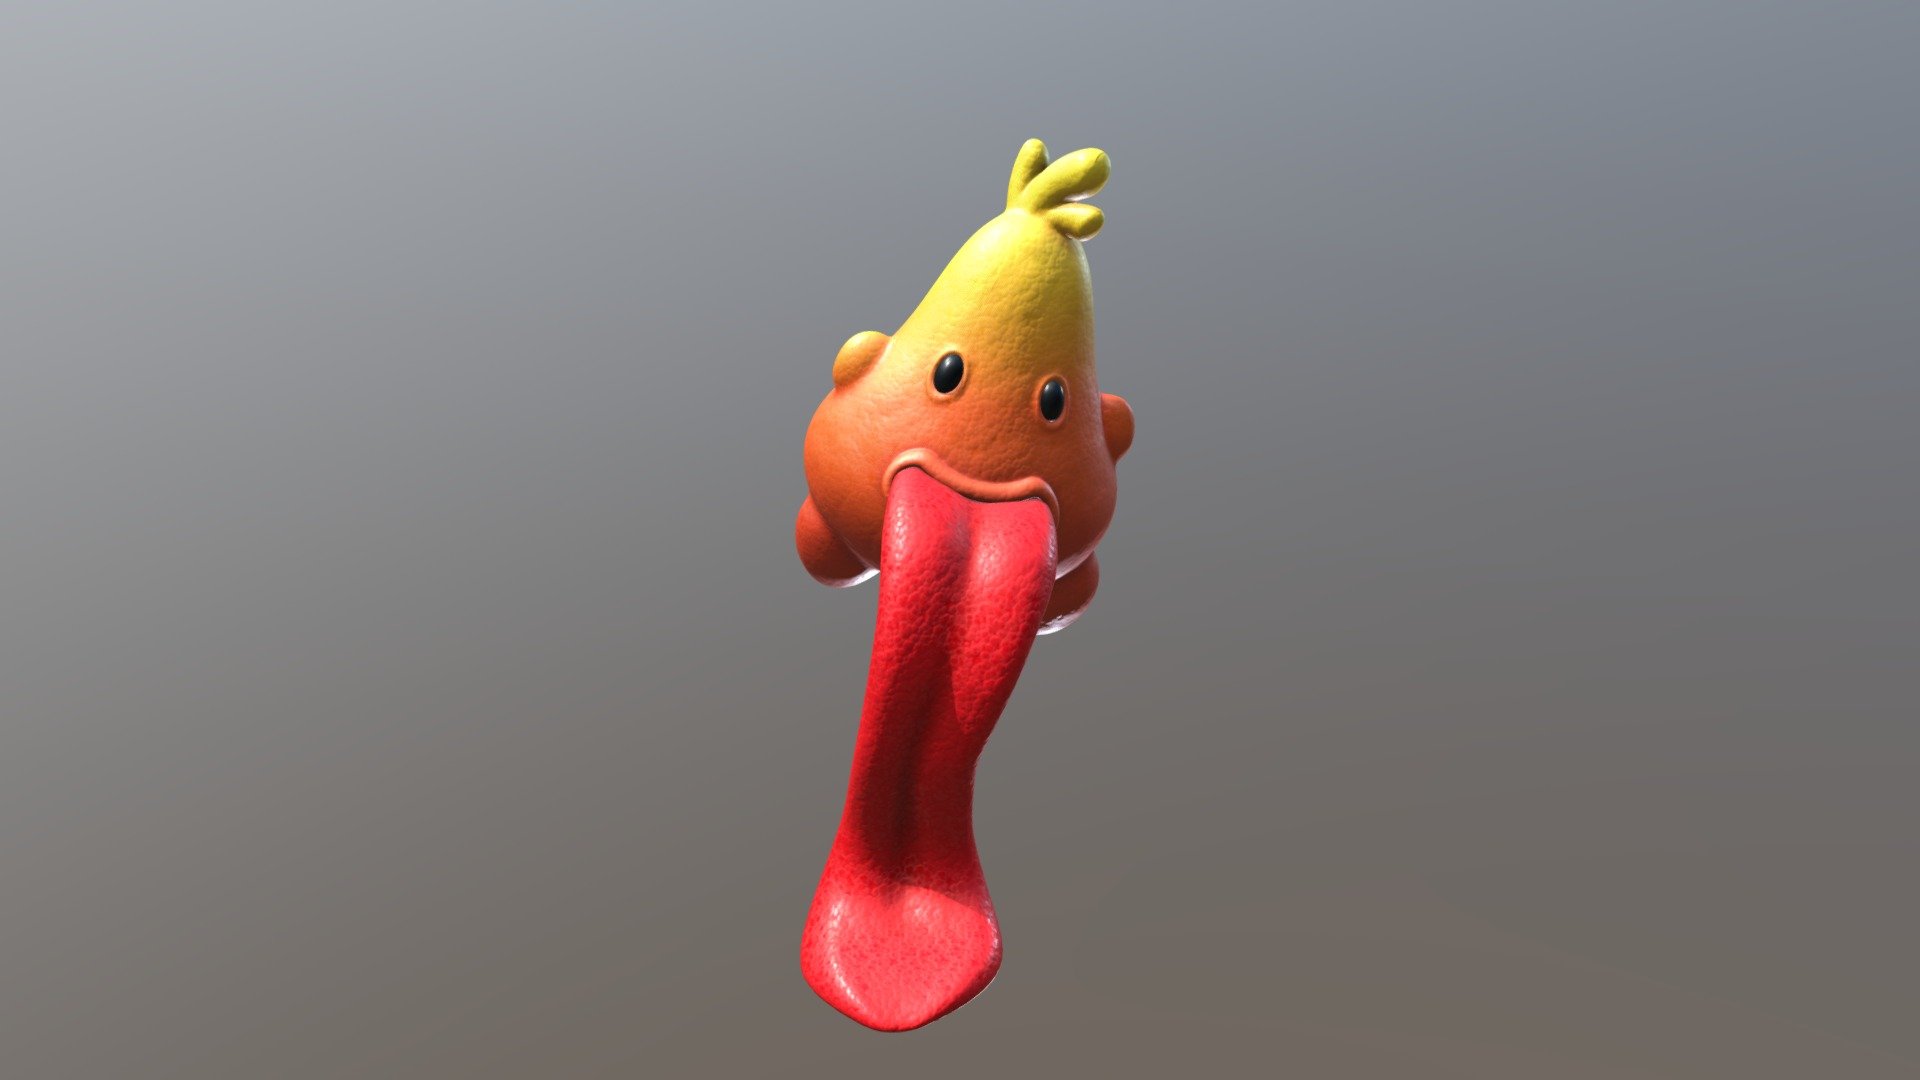 A crazy little lemon boy with a big tongue - Lemon Boy - Cartoon Character - 3D model by thebigxer 3d model